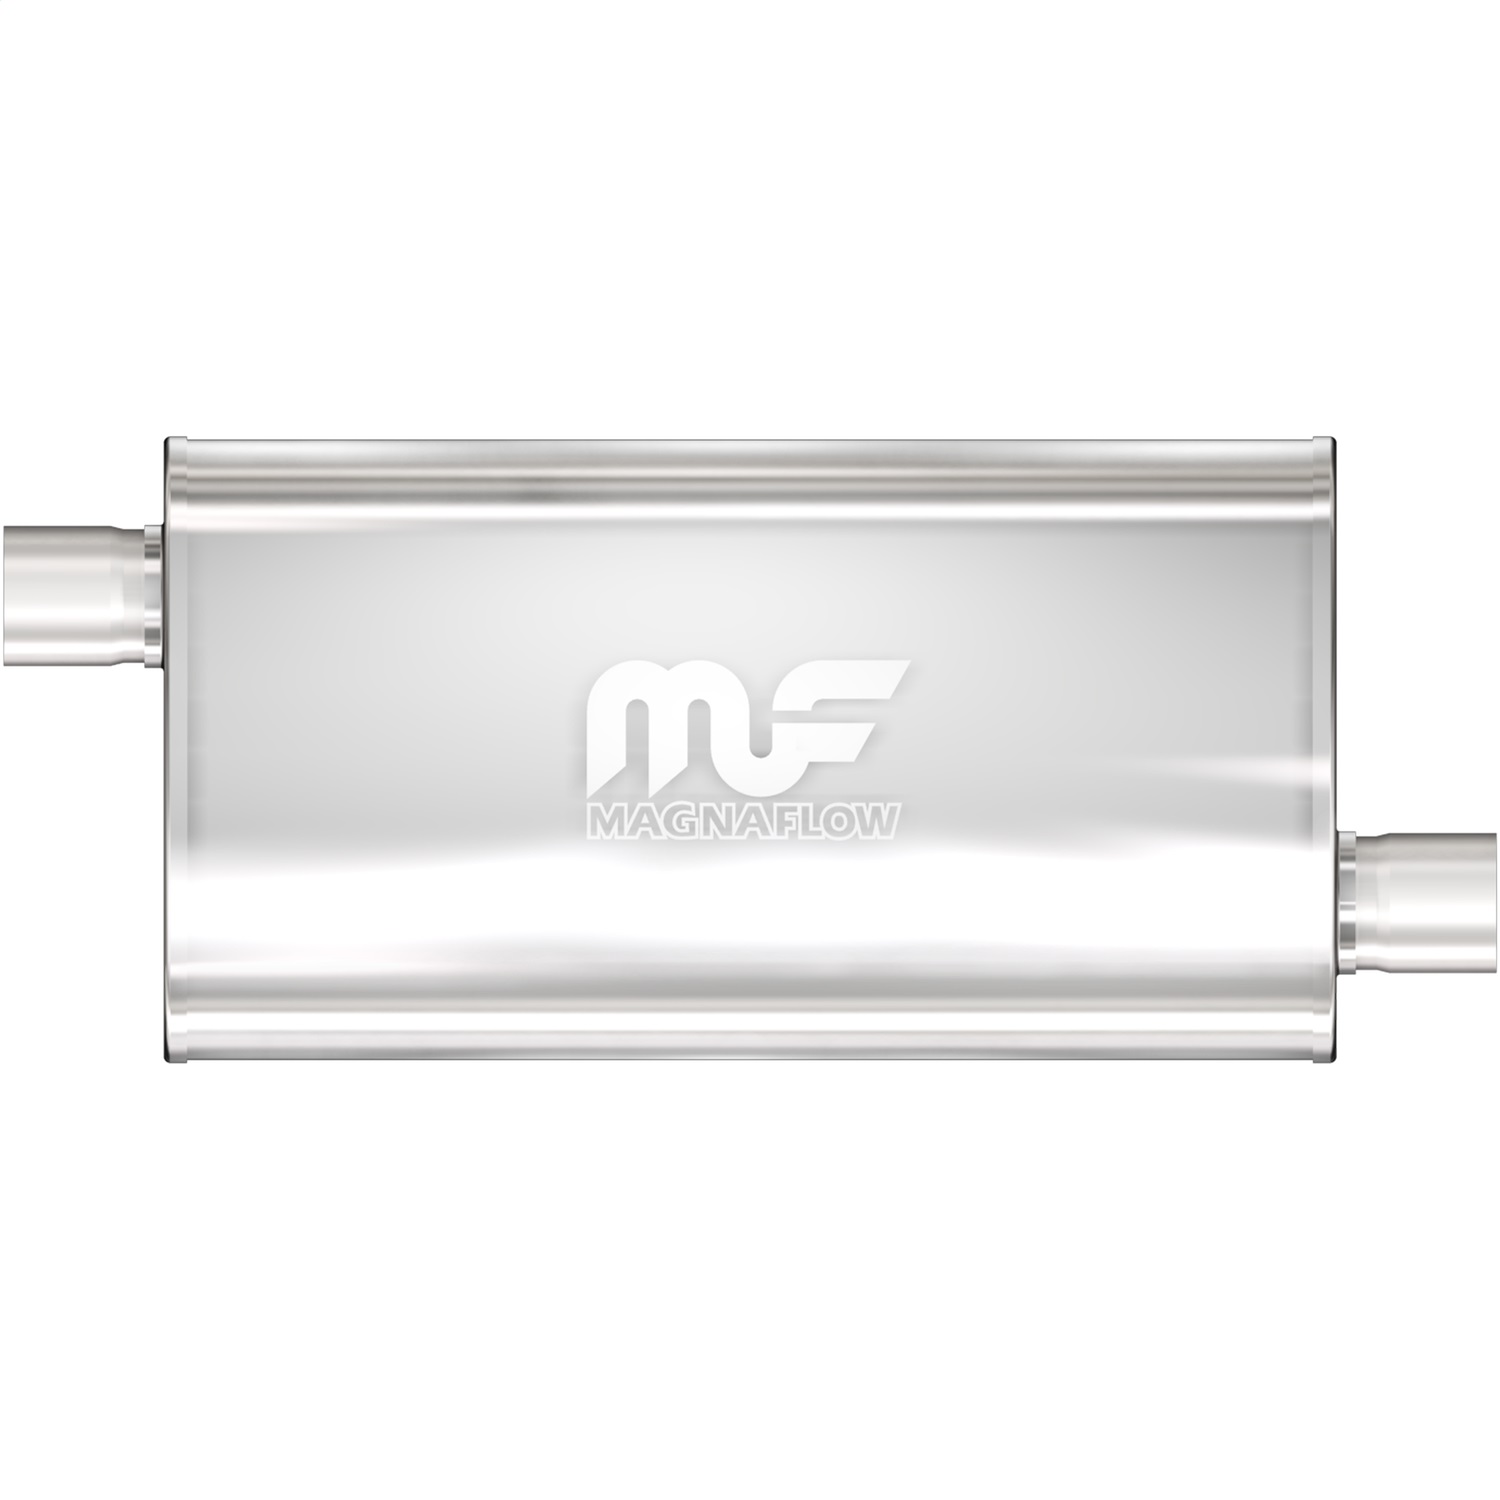 Magnaflow Performance Exhaust Magnaflow Performance Exhaust 12577 Stainless Steel Muffler